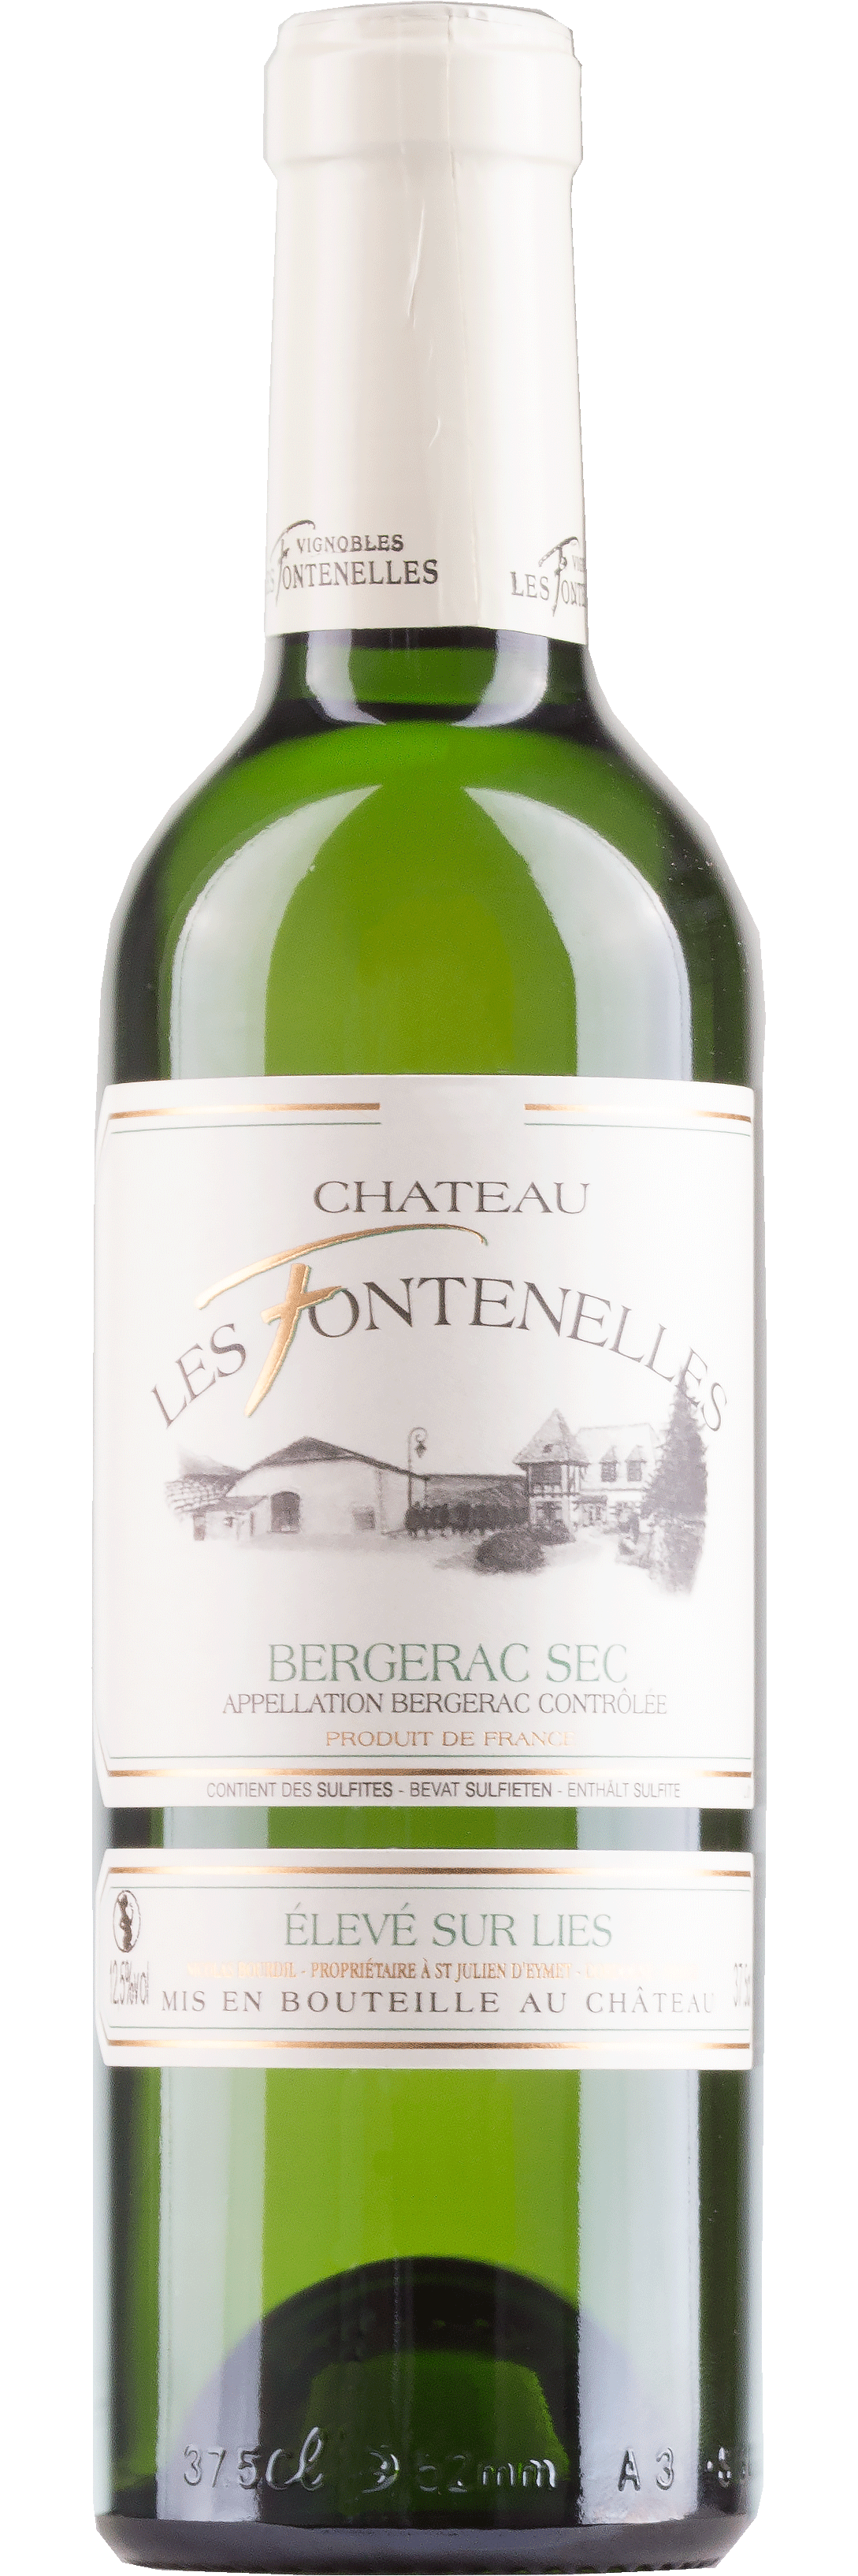 Chateau Les Fontenelles Bergerac Sec - Frankreich - Weißwein trocken - 0,75l - 12,5% vol